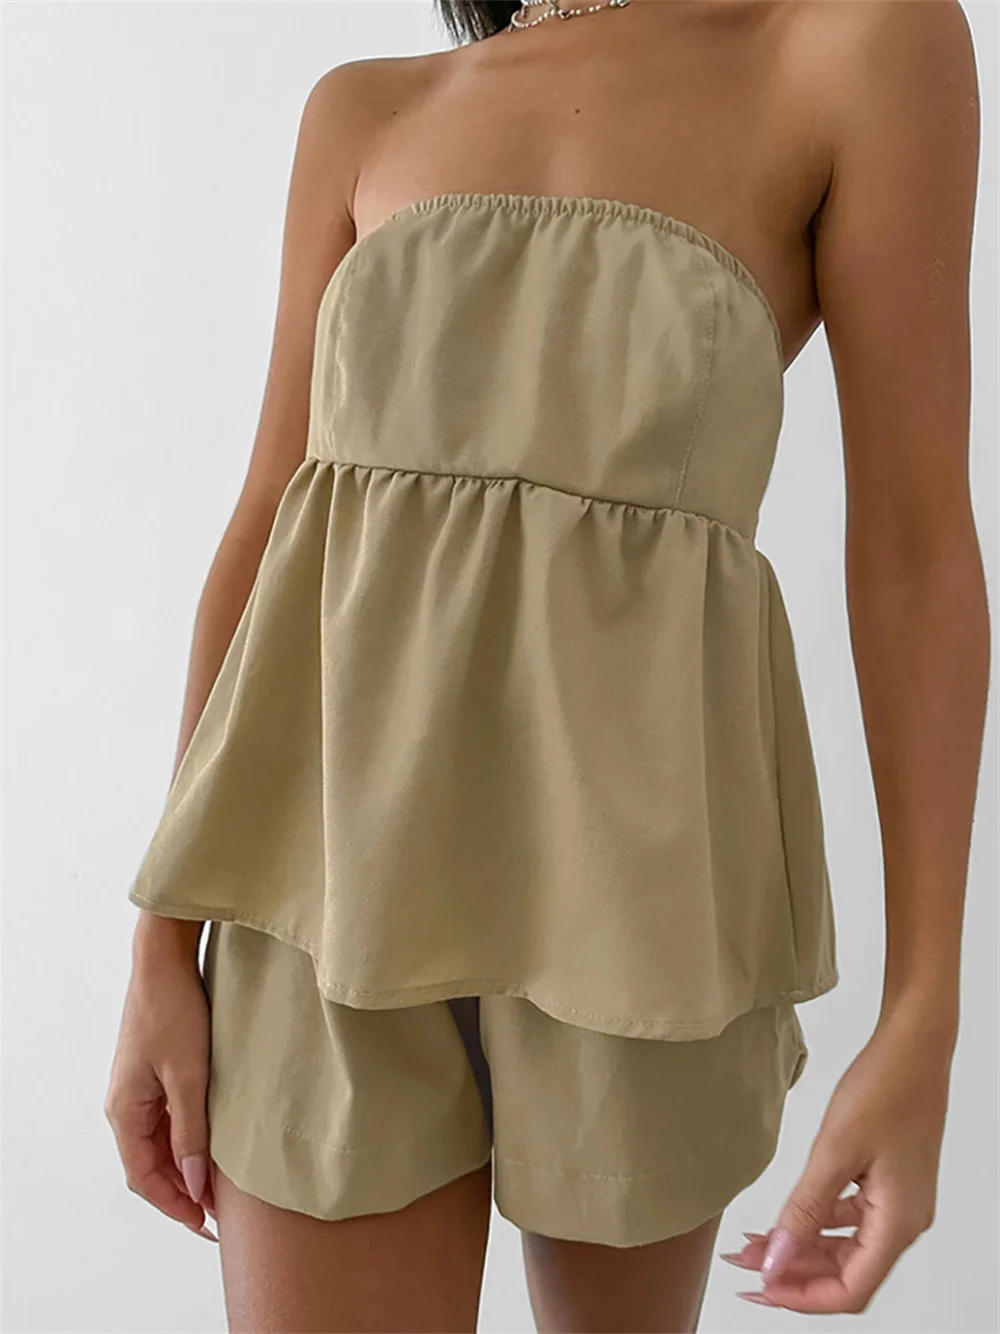 

Casual Khaki Strapless Tank Top Shorts Set for Women Summer Sleeveless Crop Tops High Waist Wide Shorts Female Streetwear